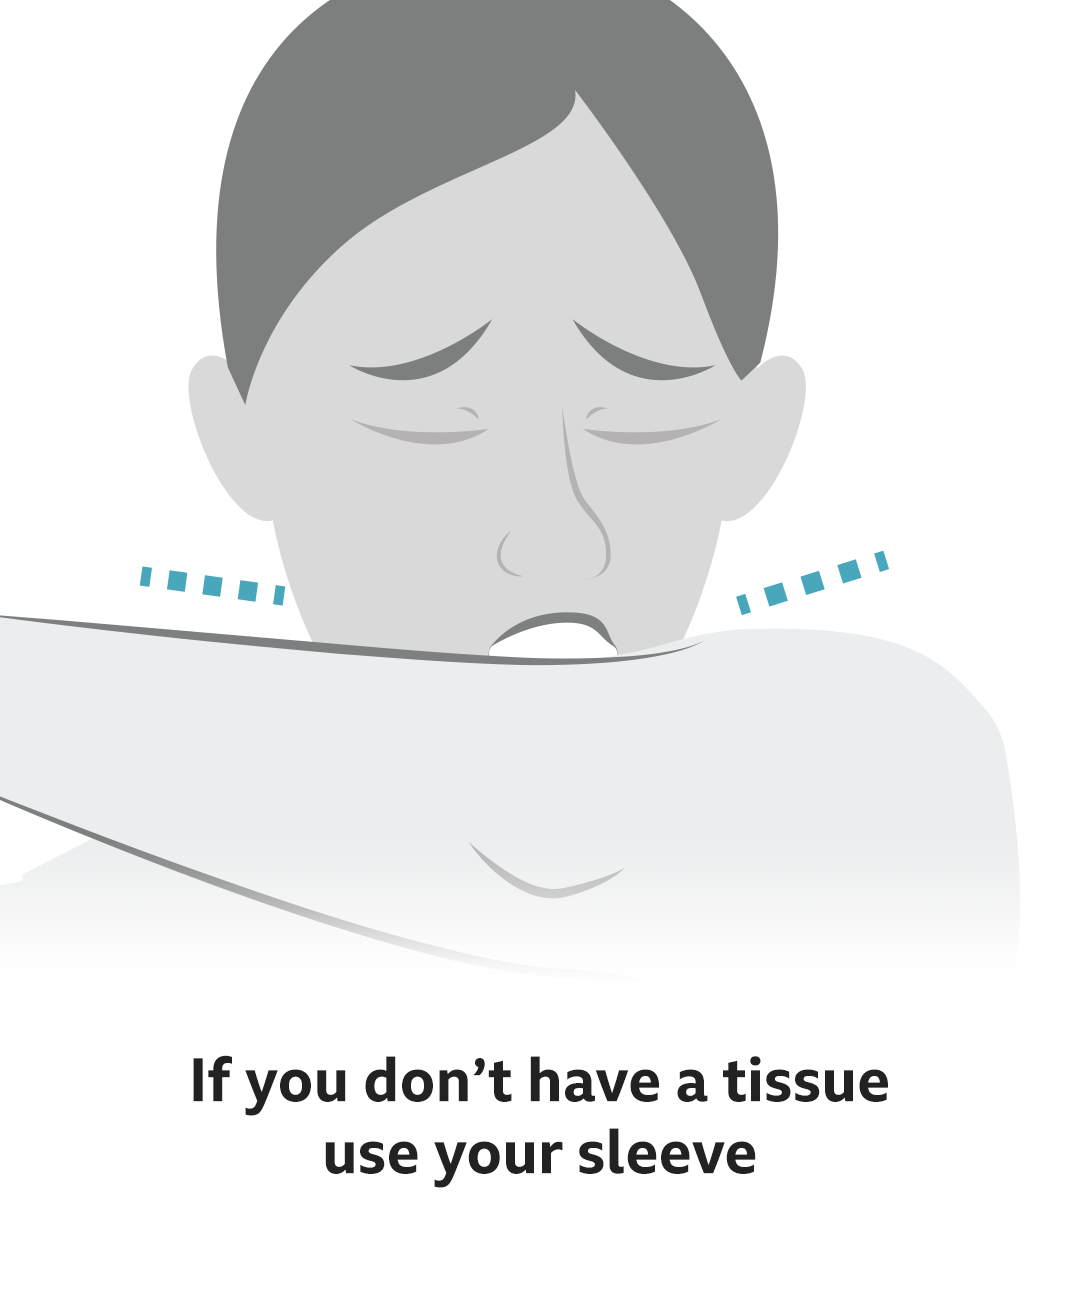 Use sleeve if no tissue